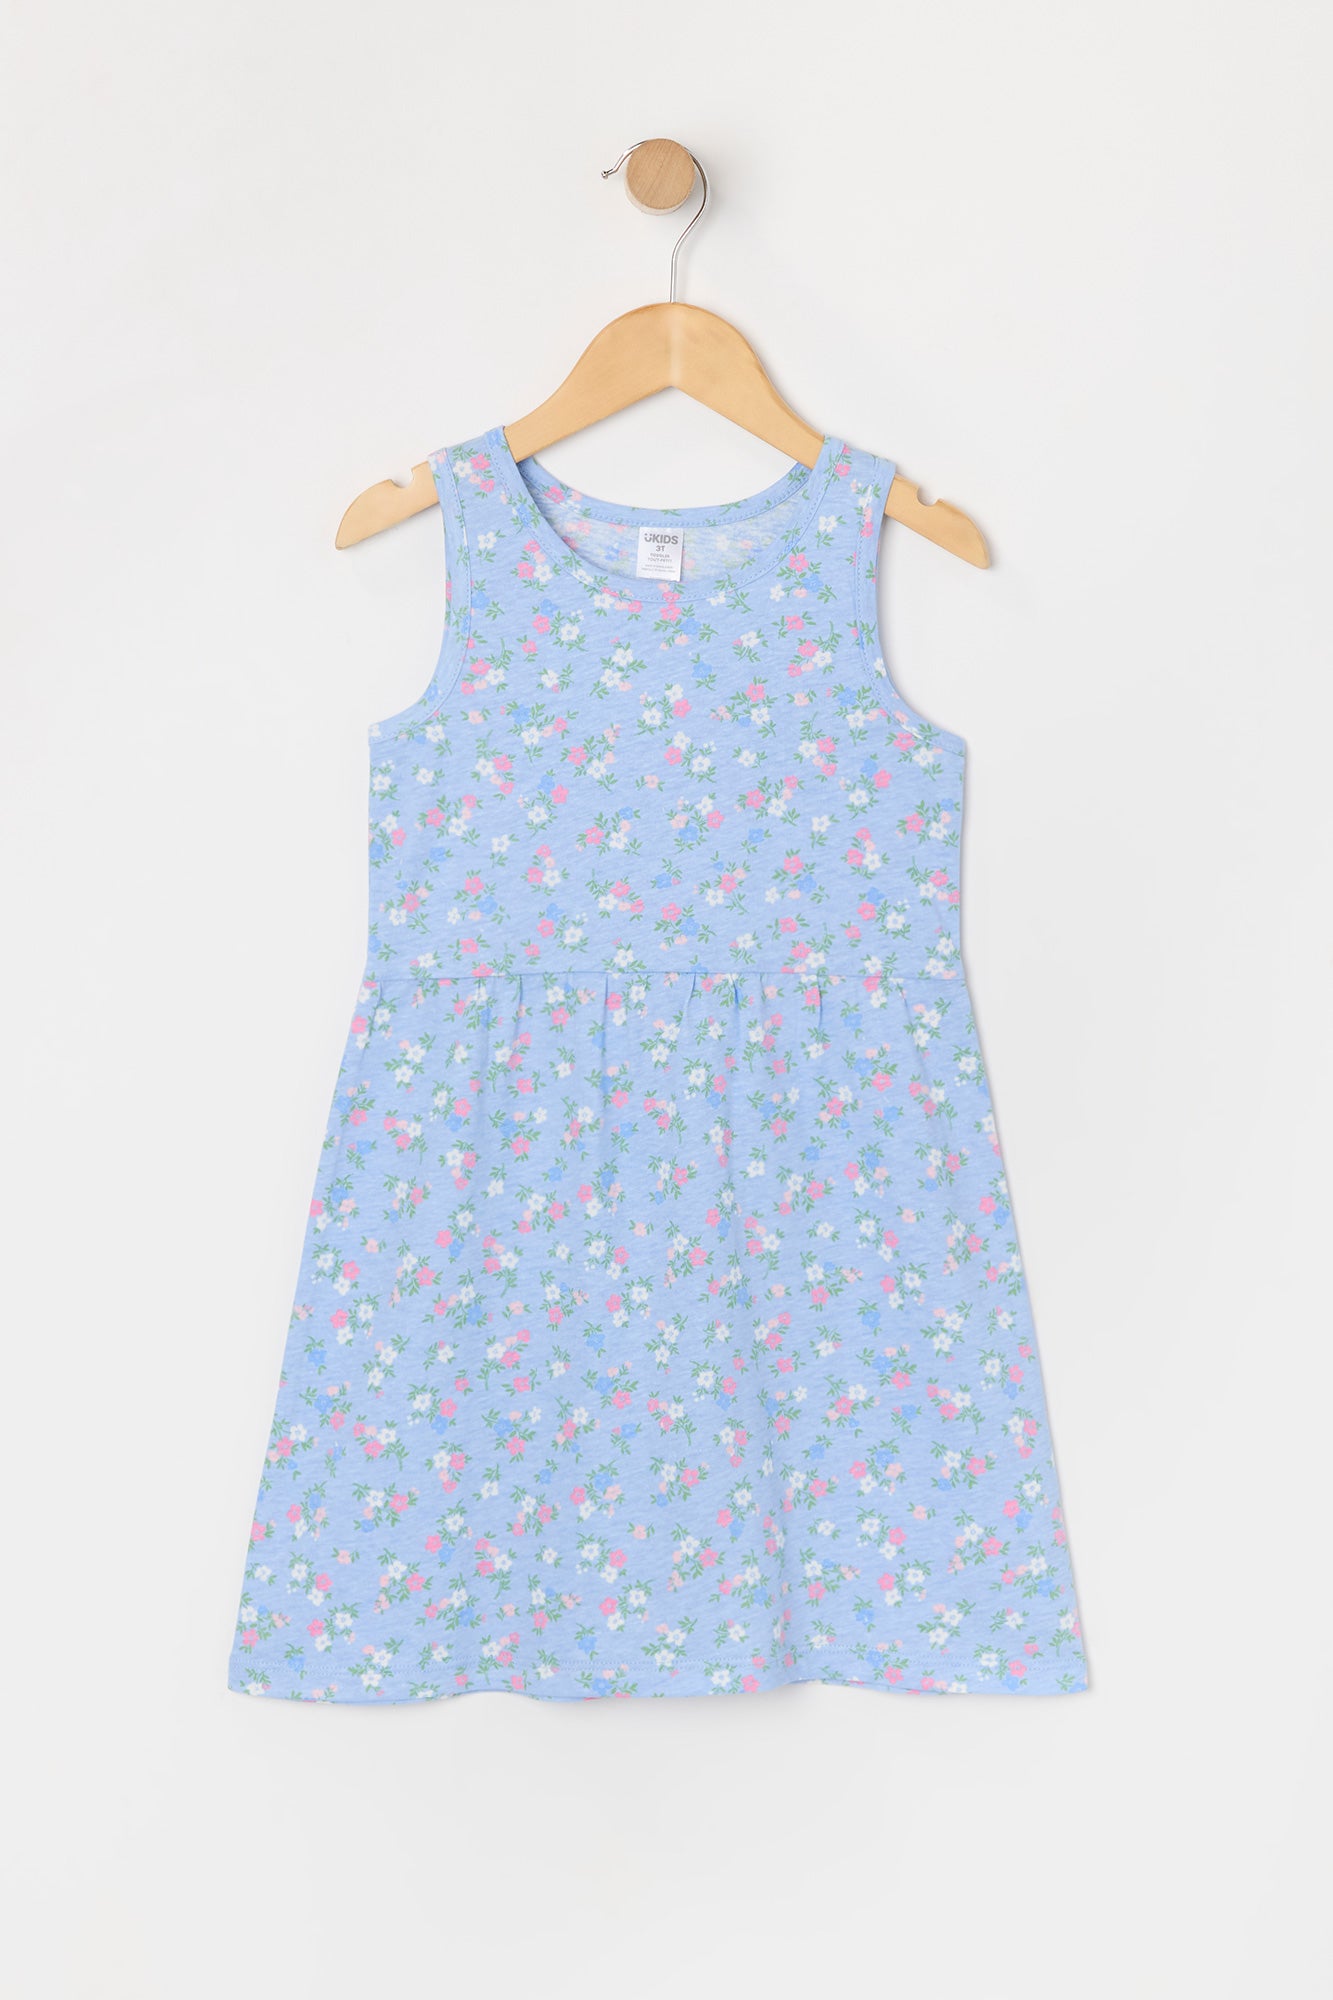 Toddler Girl Floral Print Sleeveless Dress